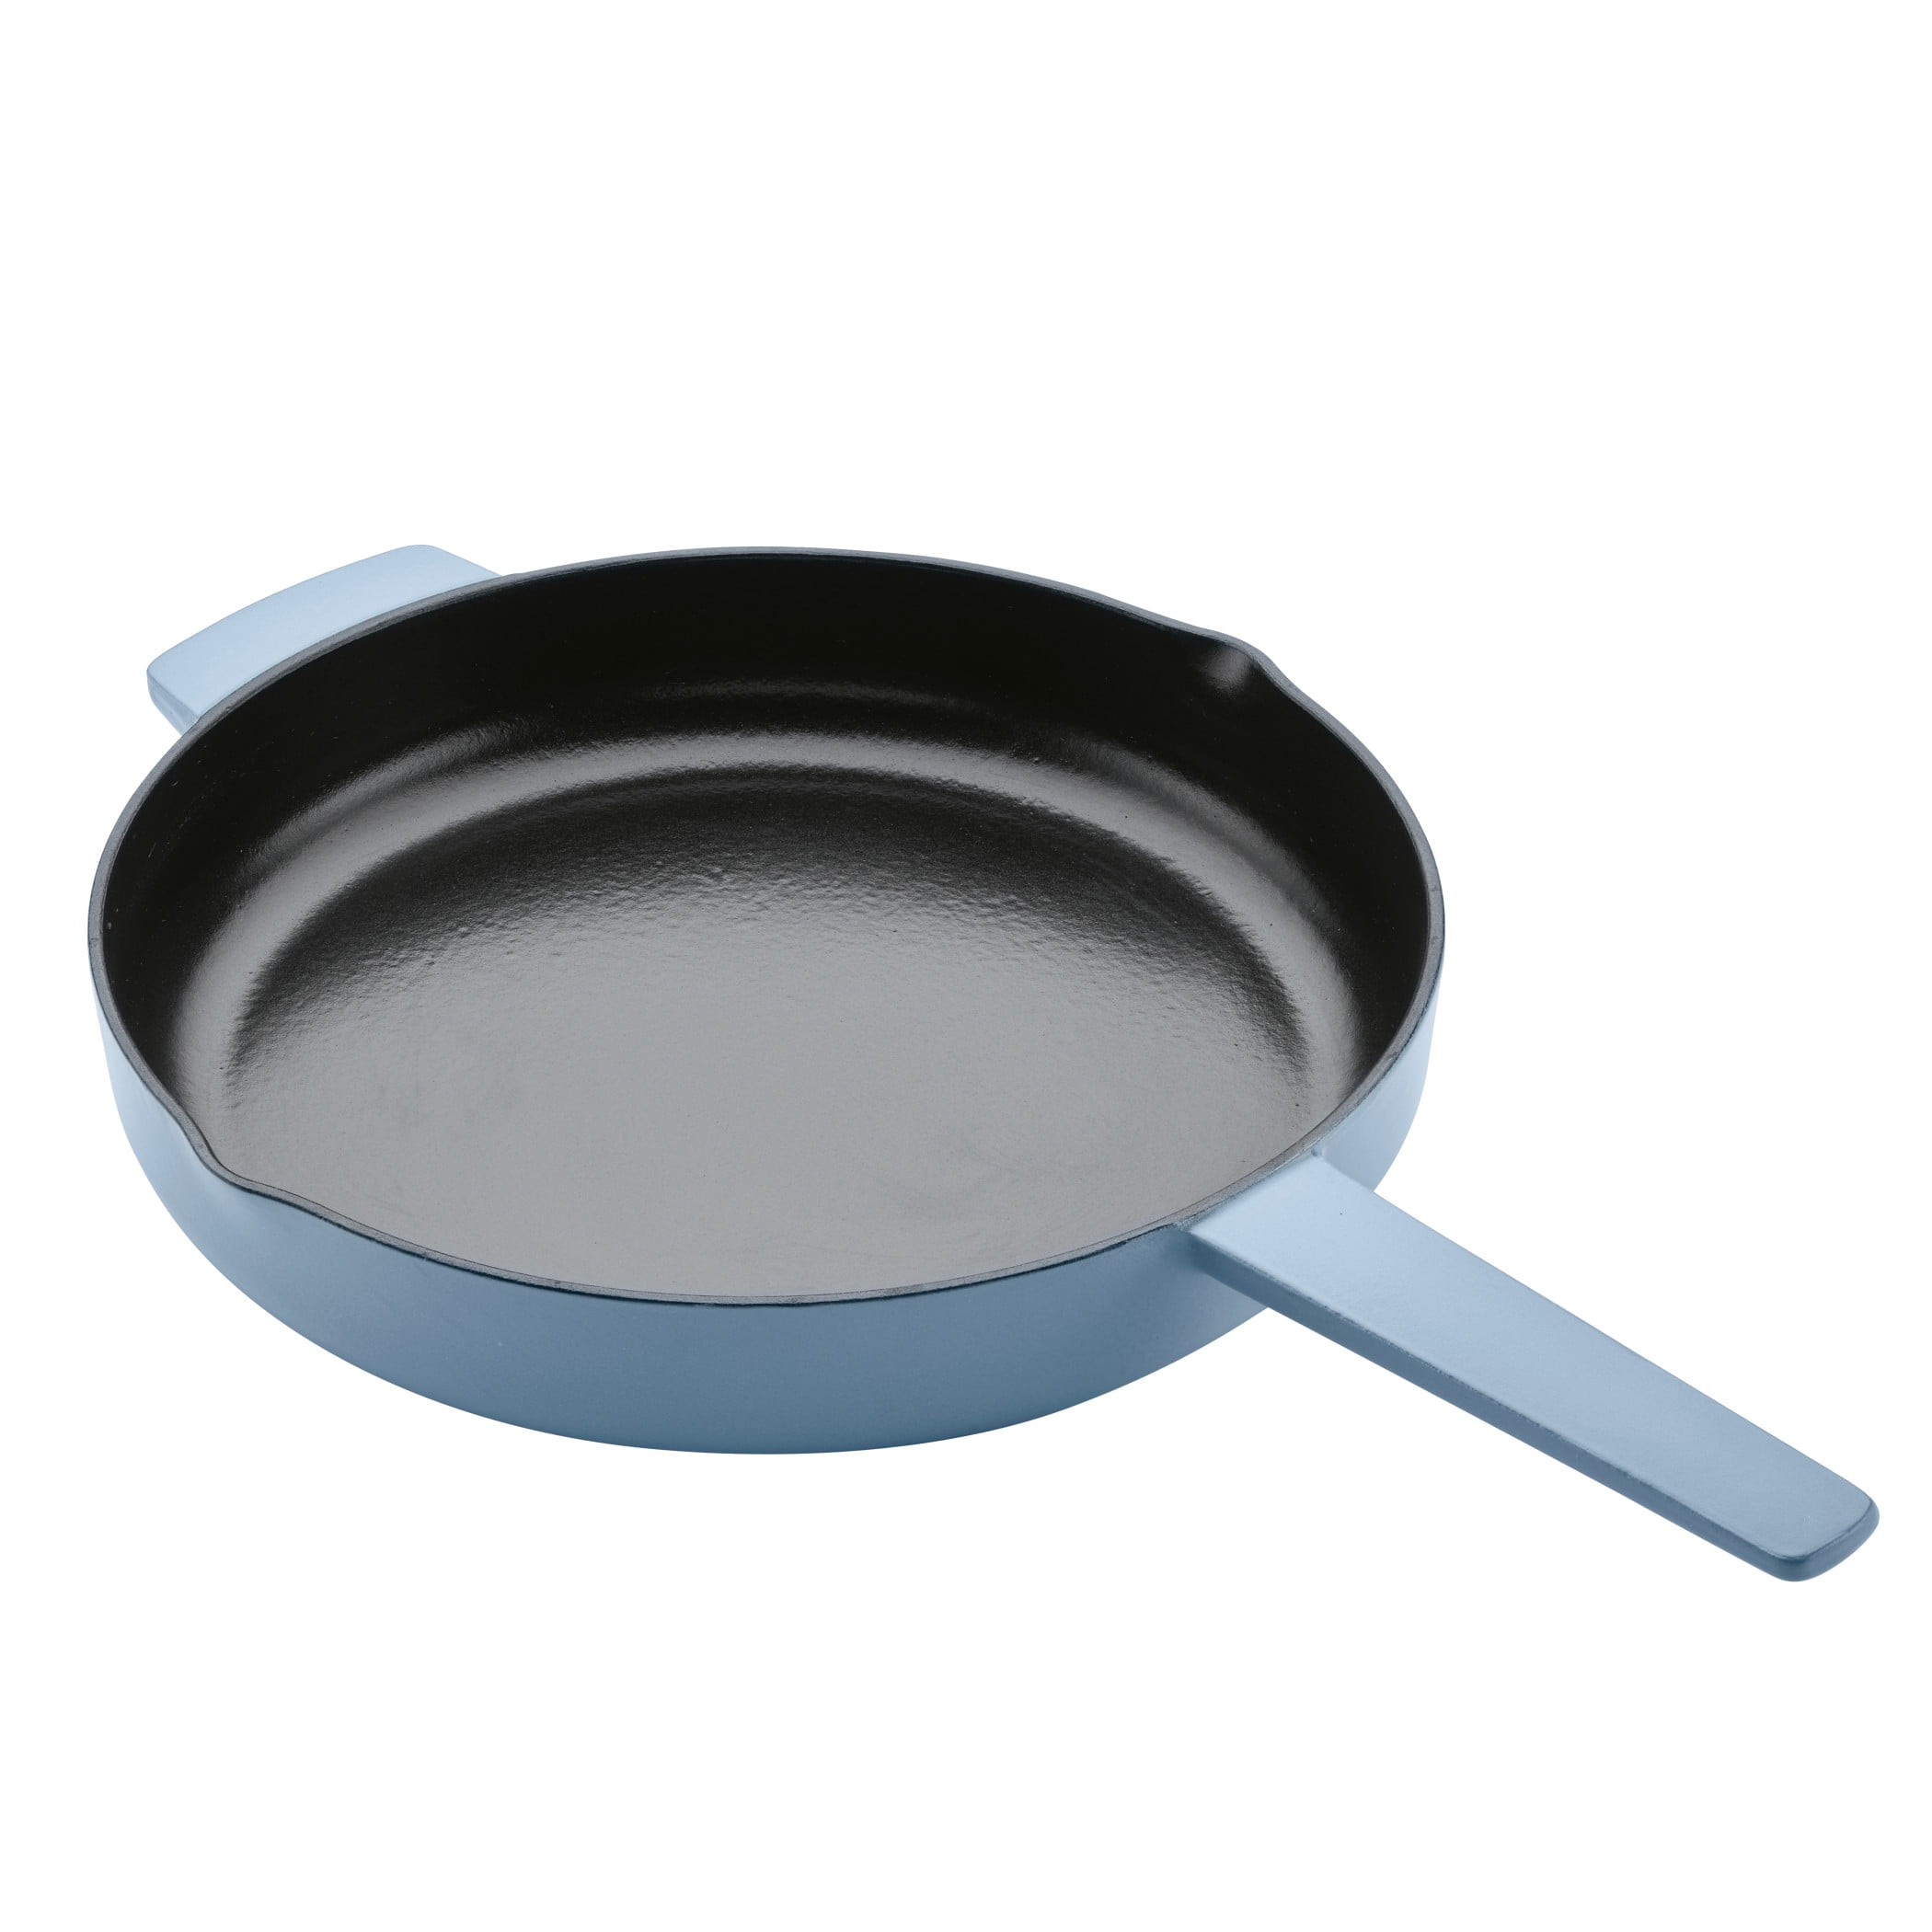 Cast Iron Skillet 12 Inch (30 CM) Naturally Non Stick, Seasoned. Krucible  Kitchen, Frying Pan